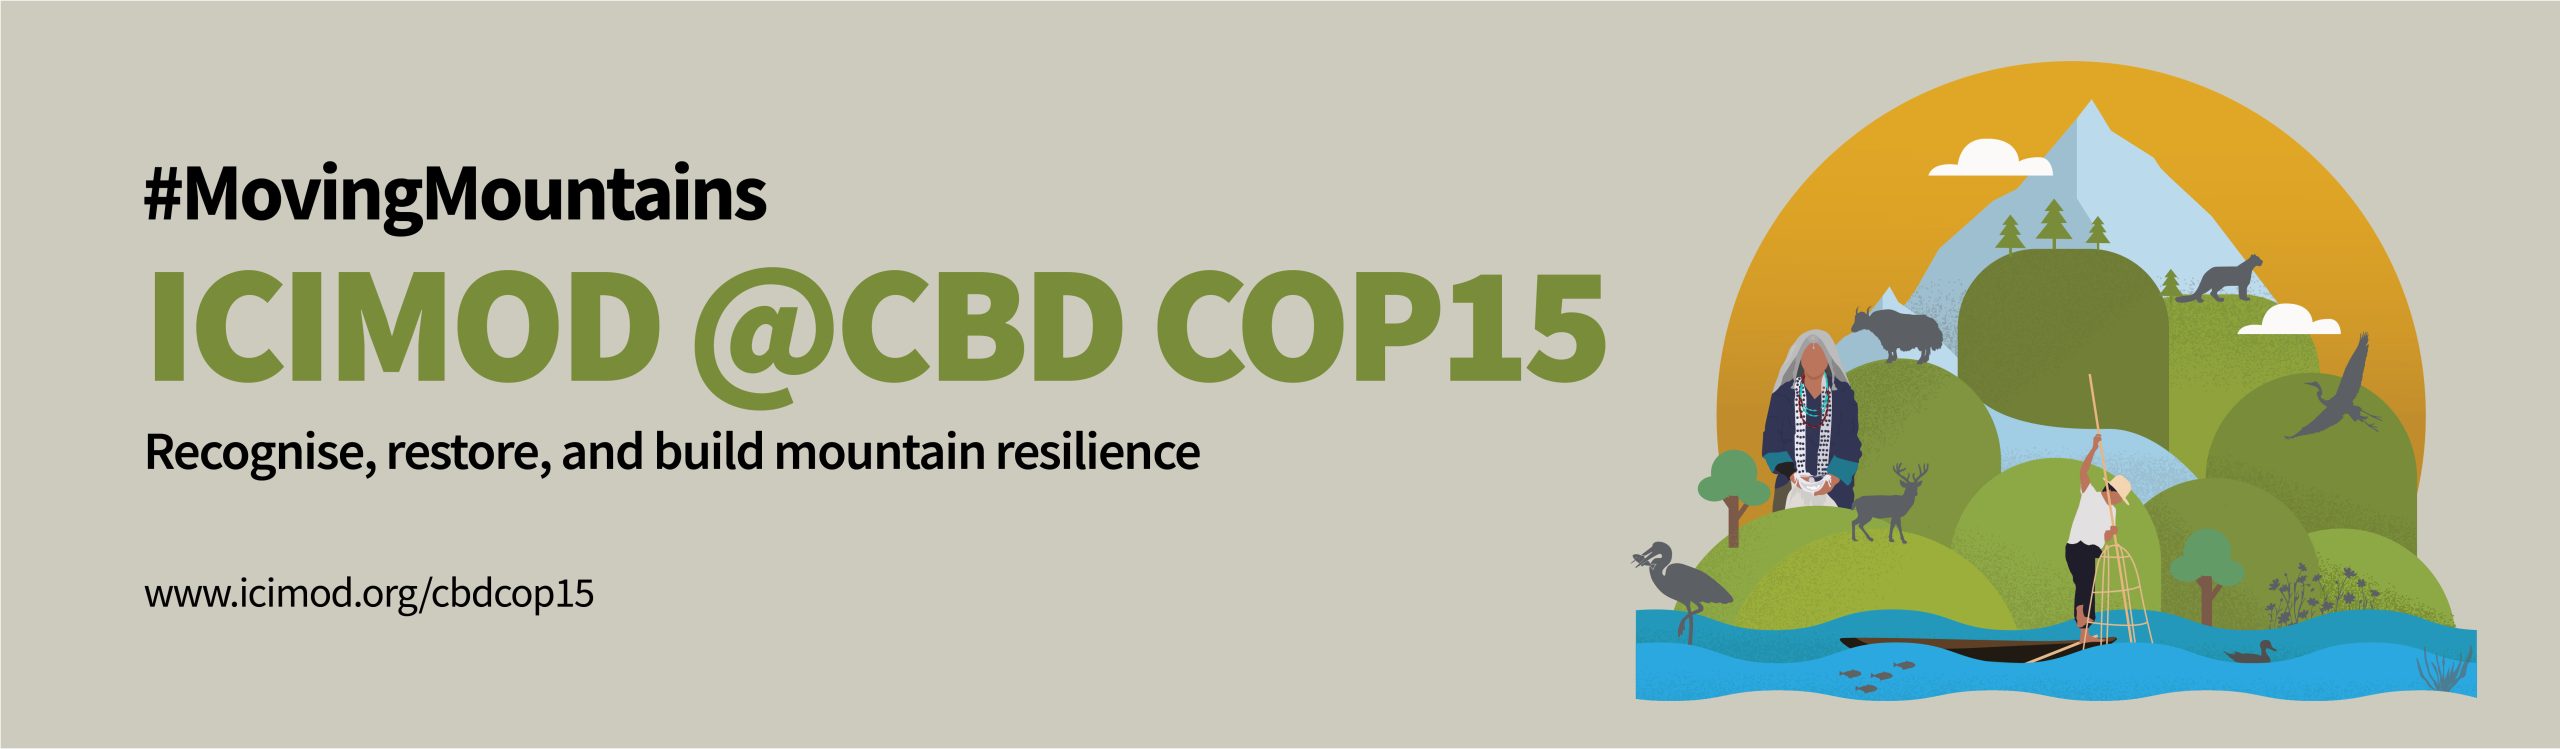 CBD COP 15 banner